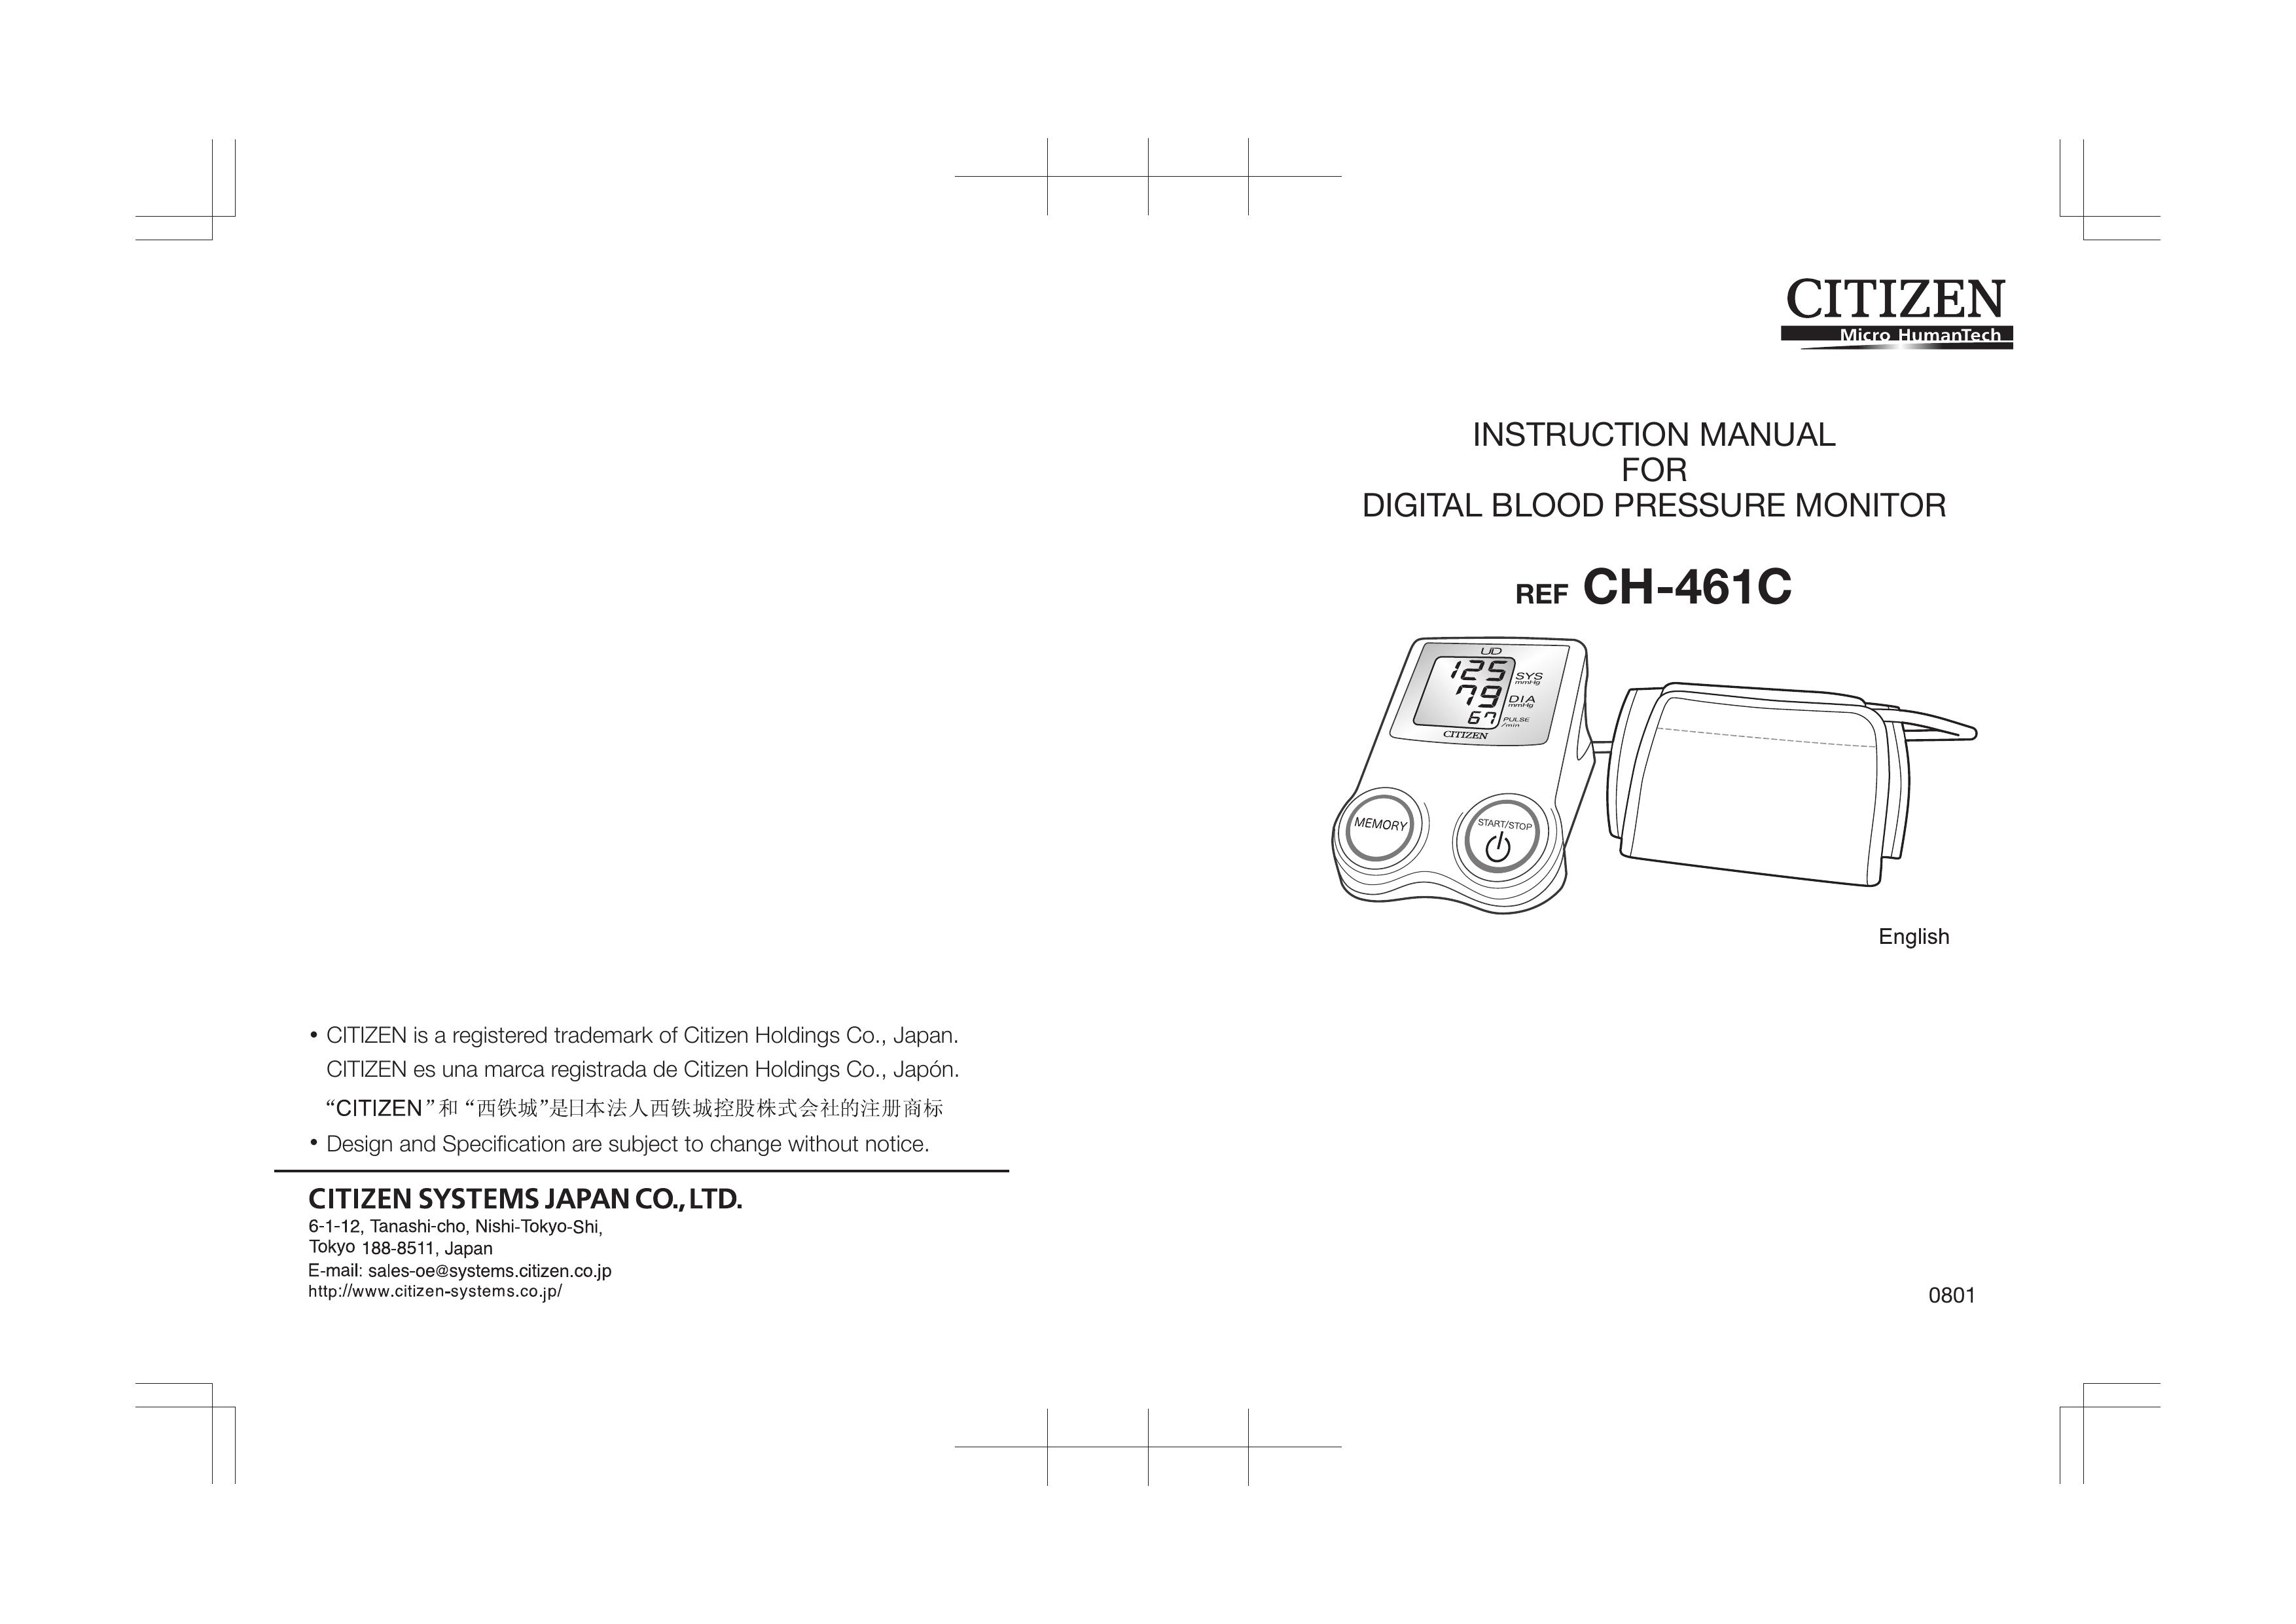 Citizen CH-461C Blood Pressure Monitor User Manual